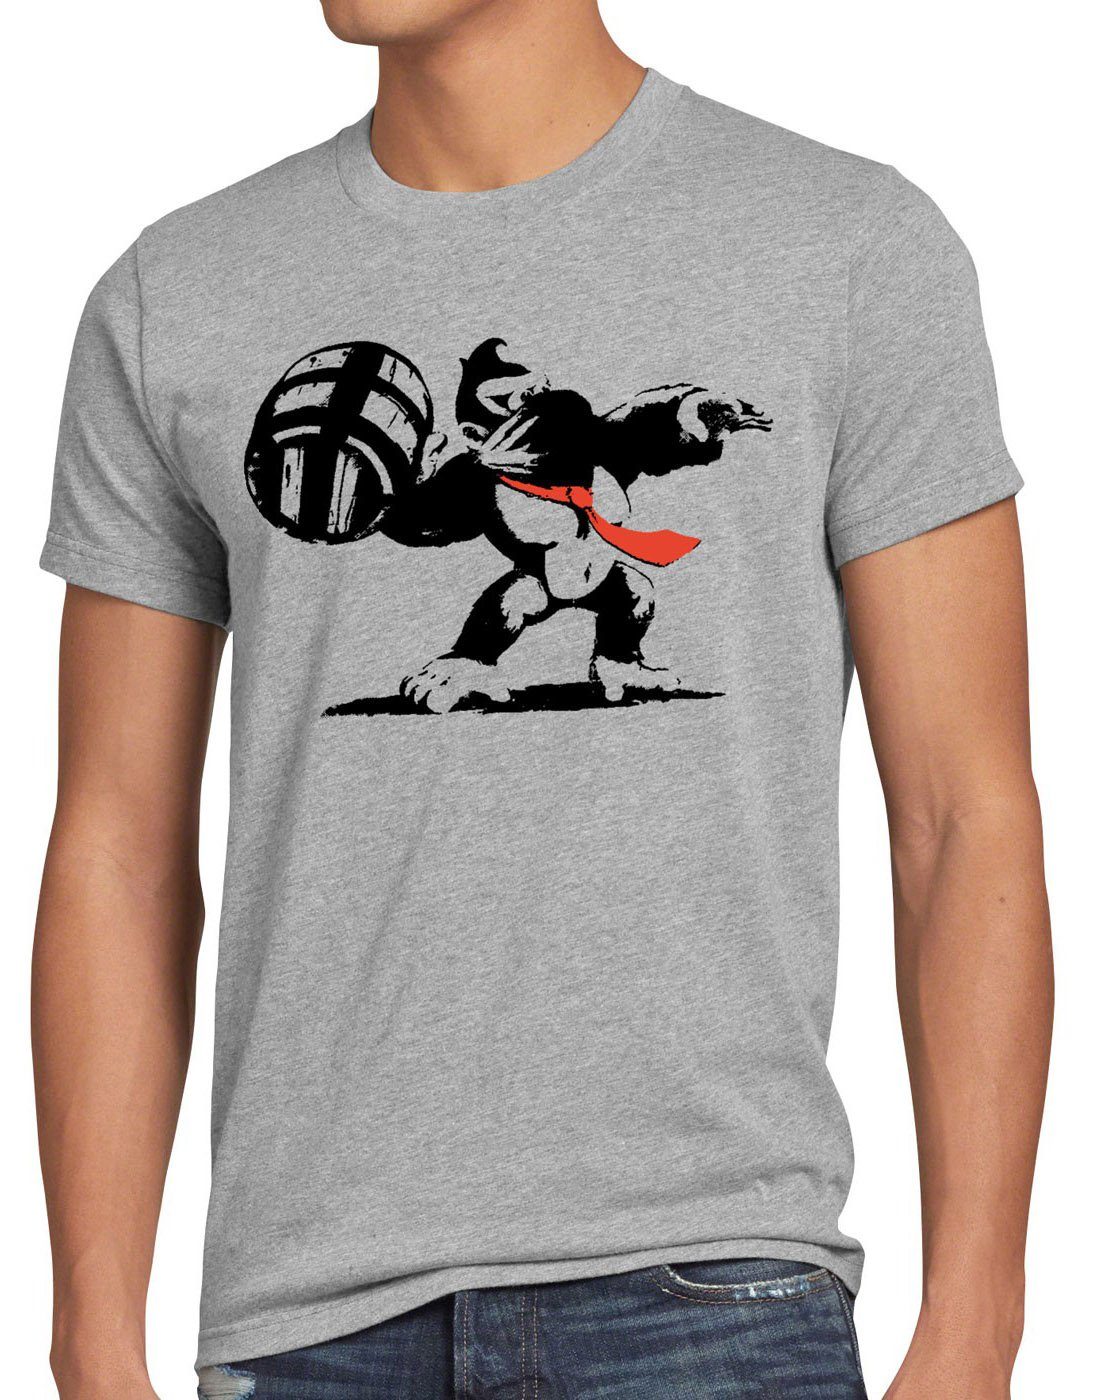 style3 Print-Shirt Herren T-Shirt Graffiti Kong donkey banksy geek snes nerd gamer switch nintendo grau meliert